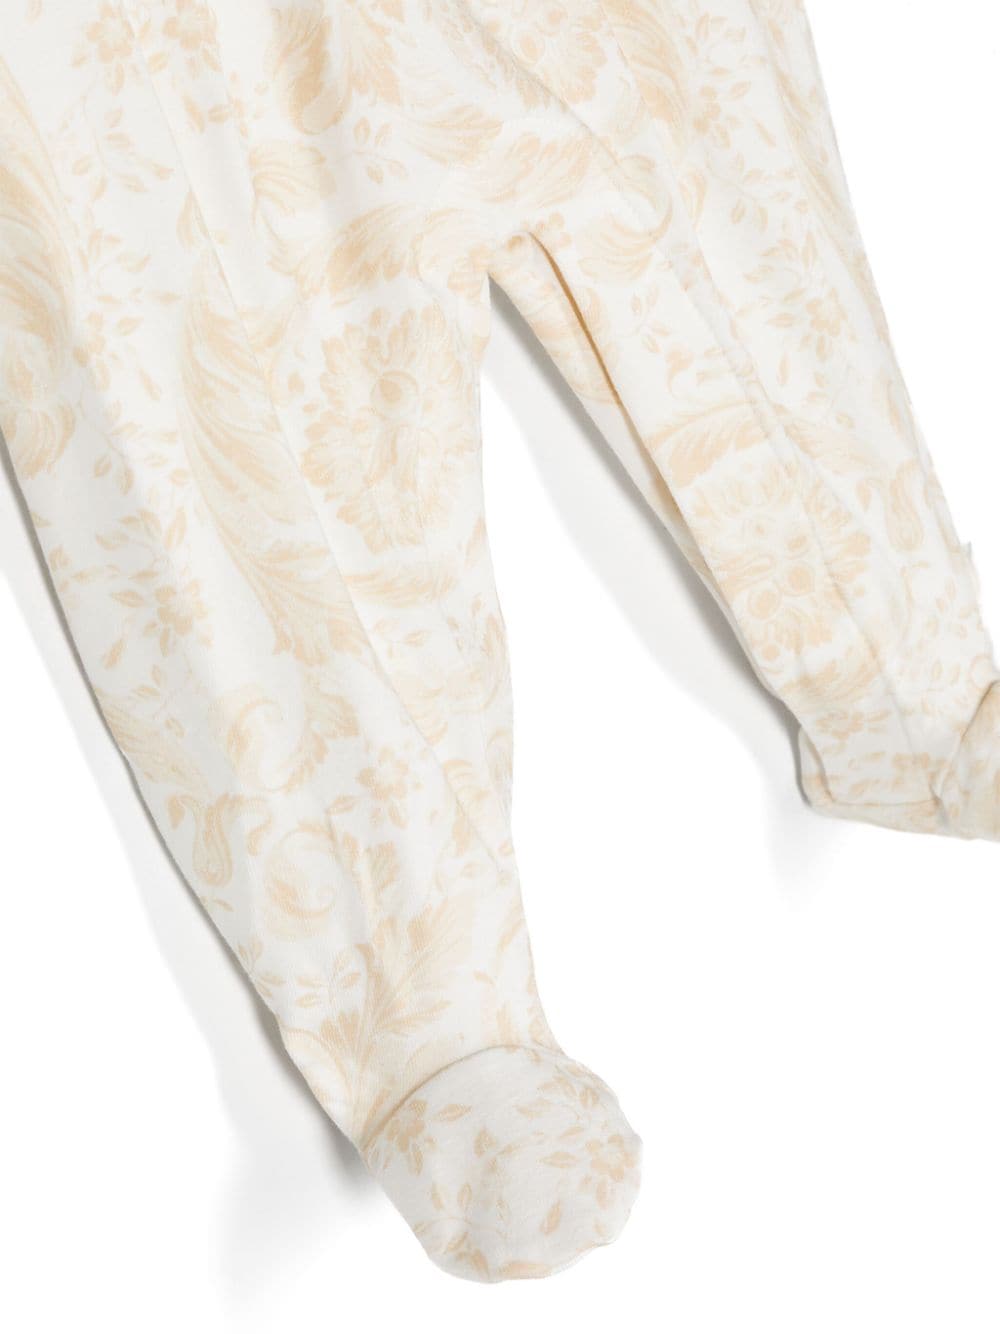 Barocco-print cotton pajamas<BR/><BR/>